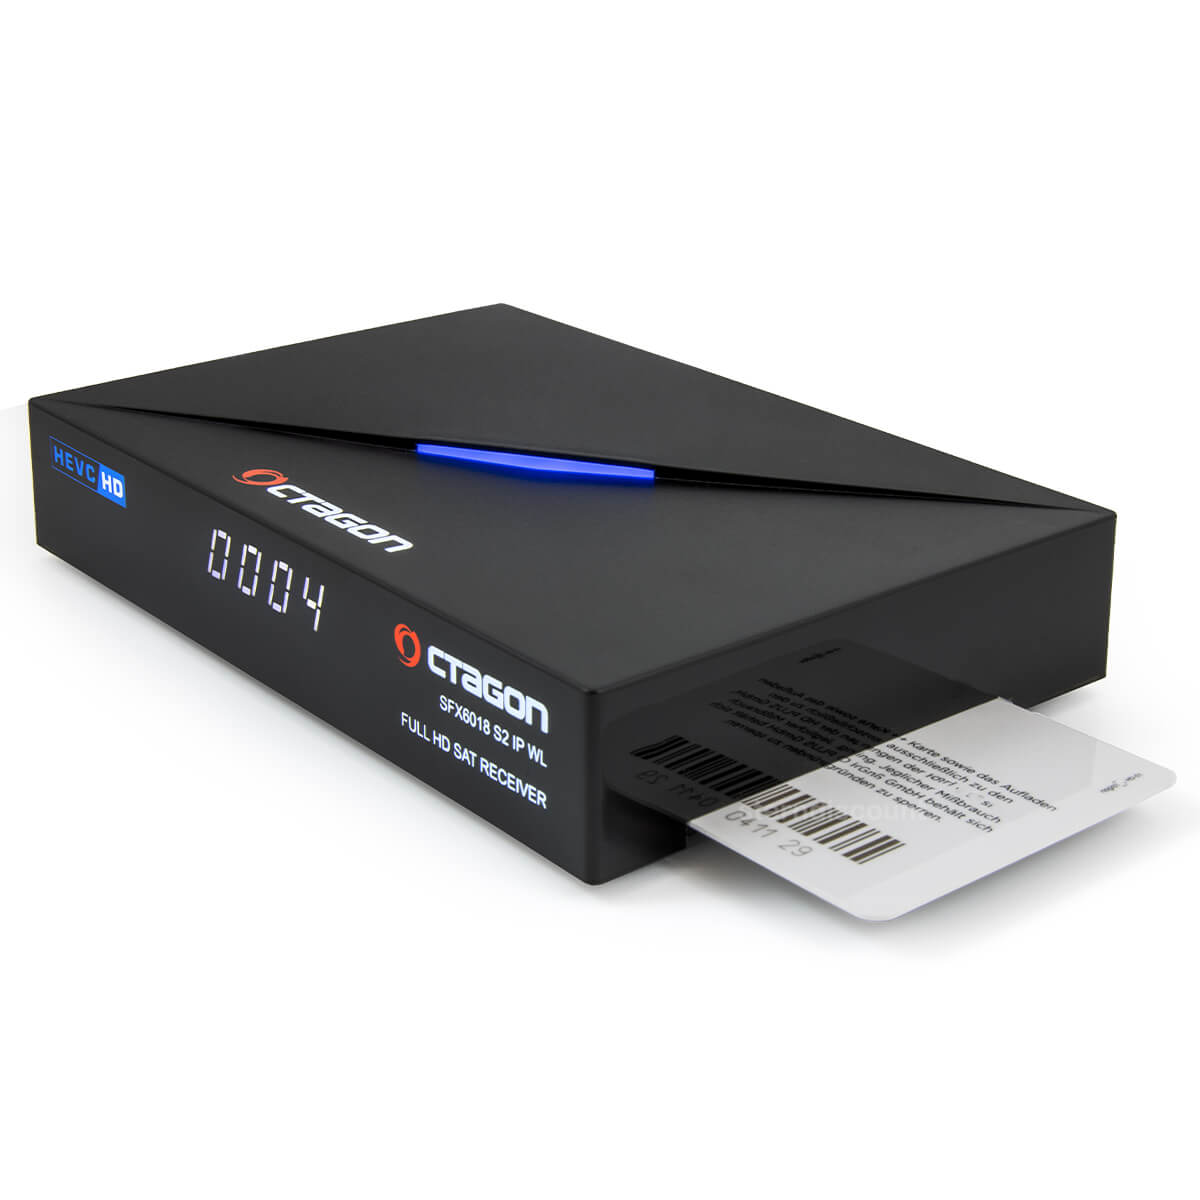 Octagon SFX 6018 S2 IP WL kartenleser DVB-s2 Receiver